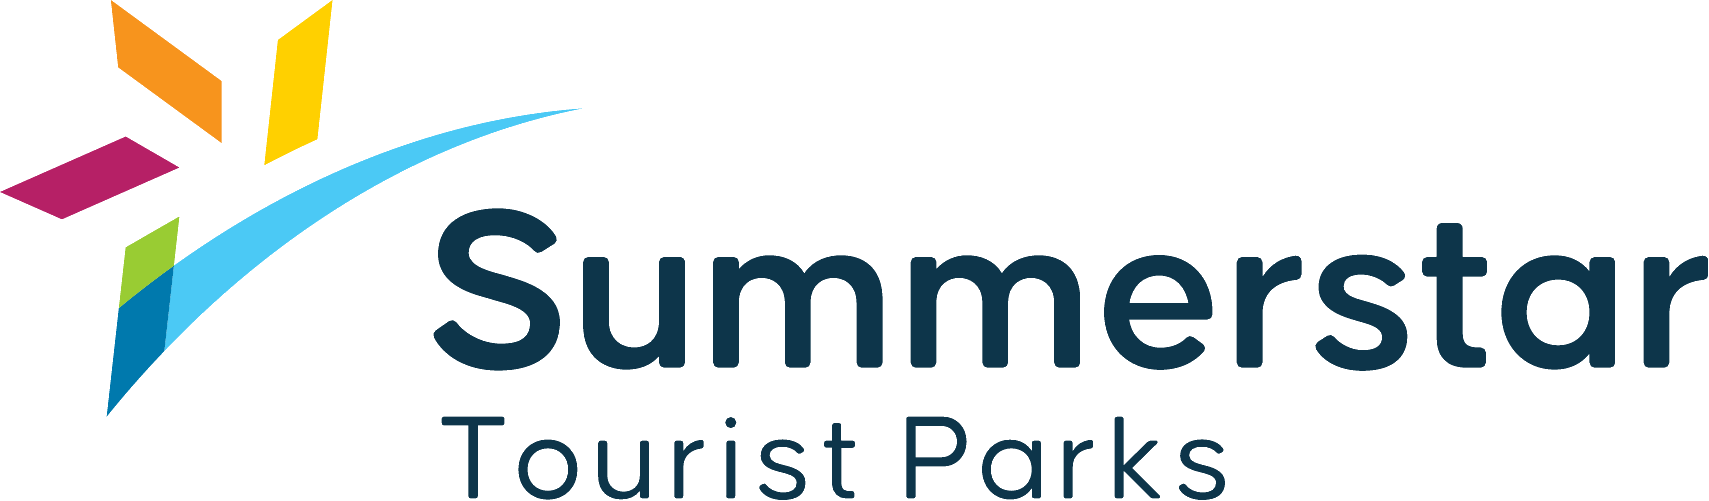 Summerstar Tourist Parks logo